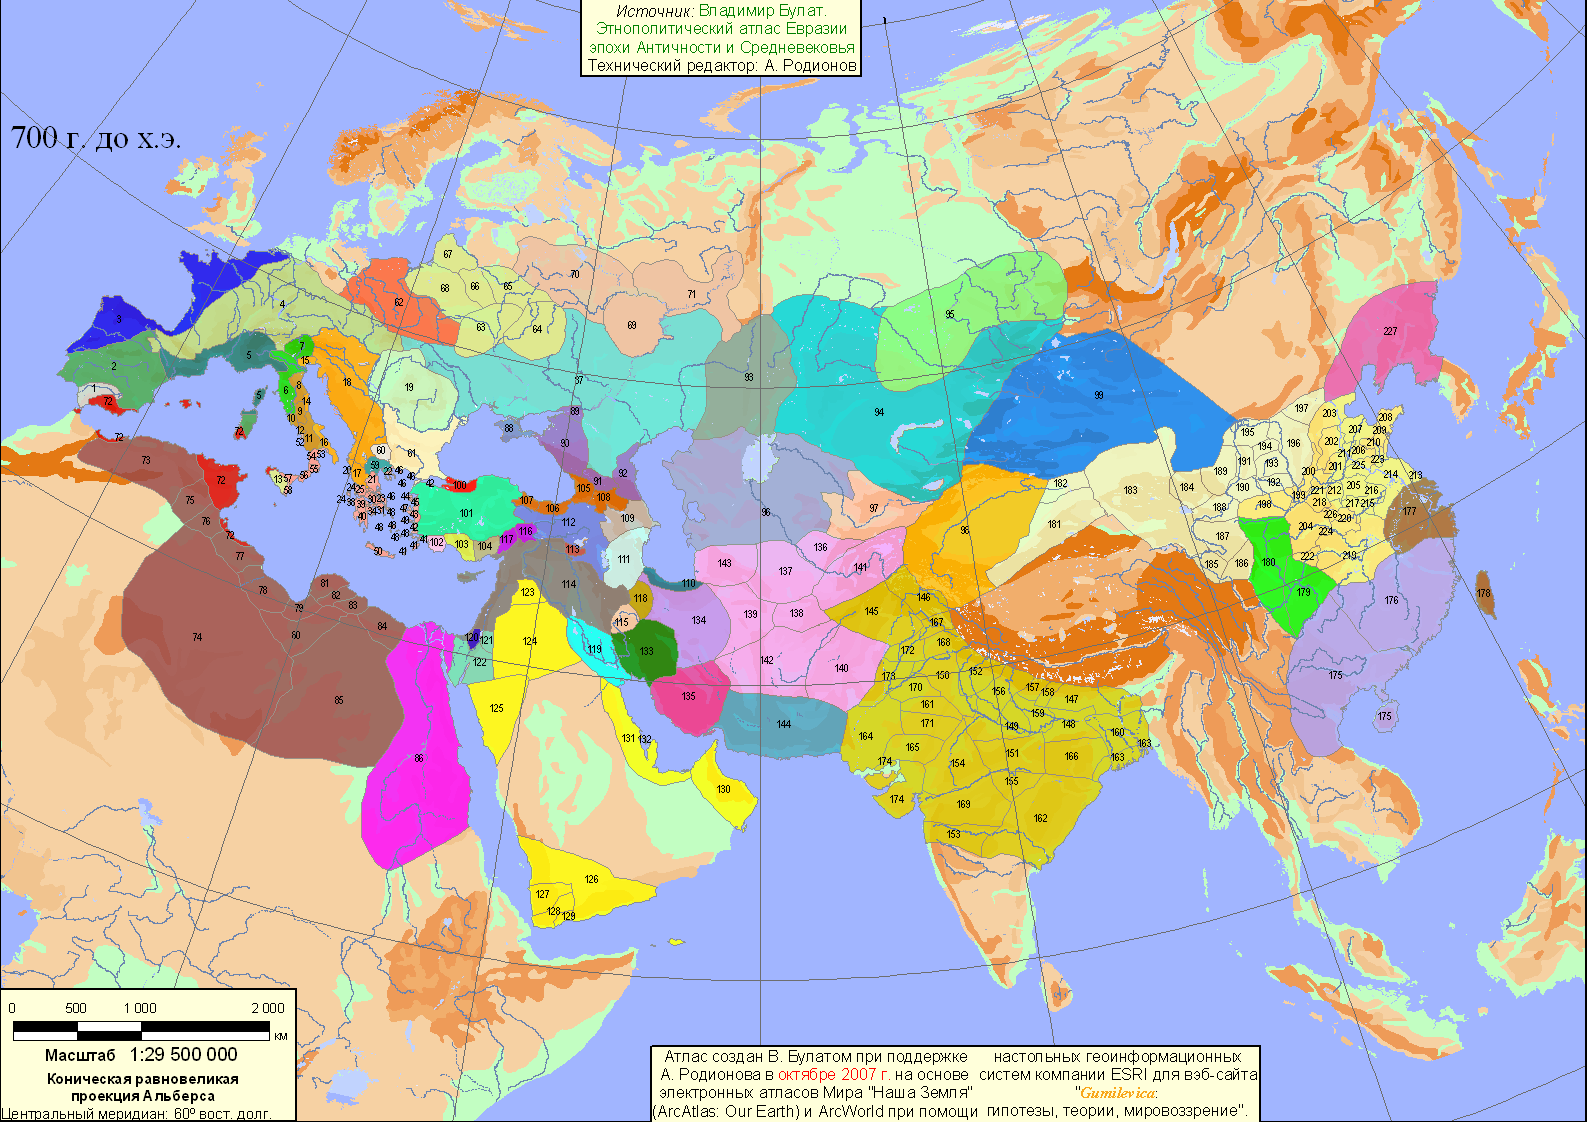 Eurasia - 700 BC (195 Kbytes)